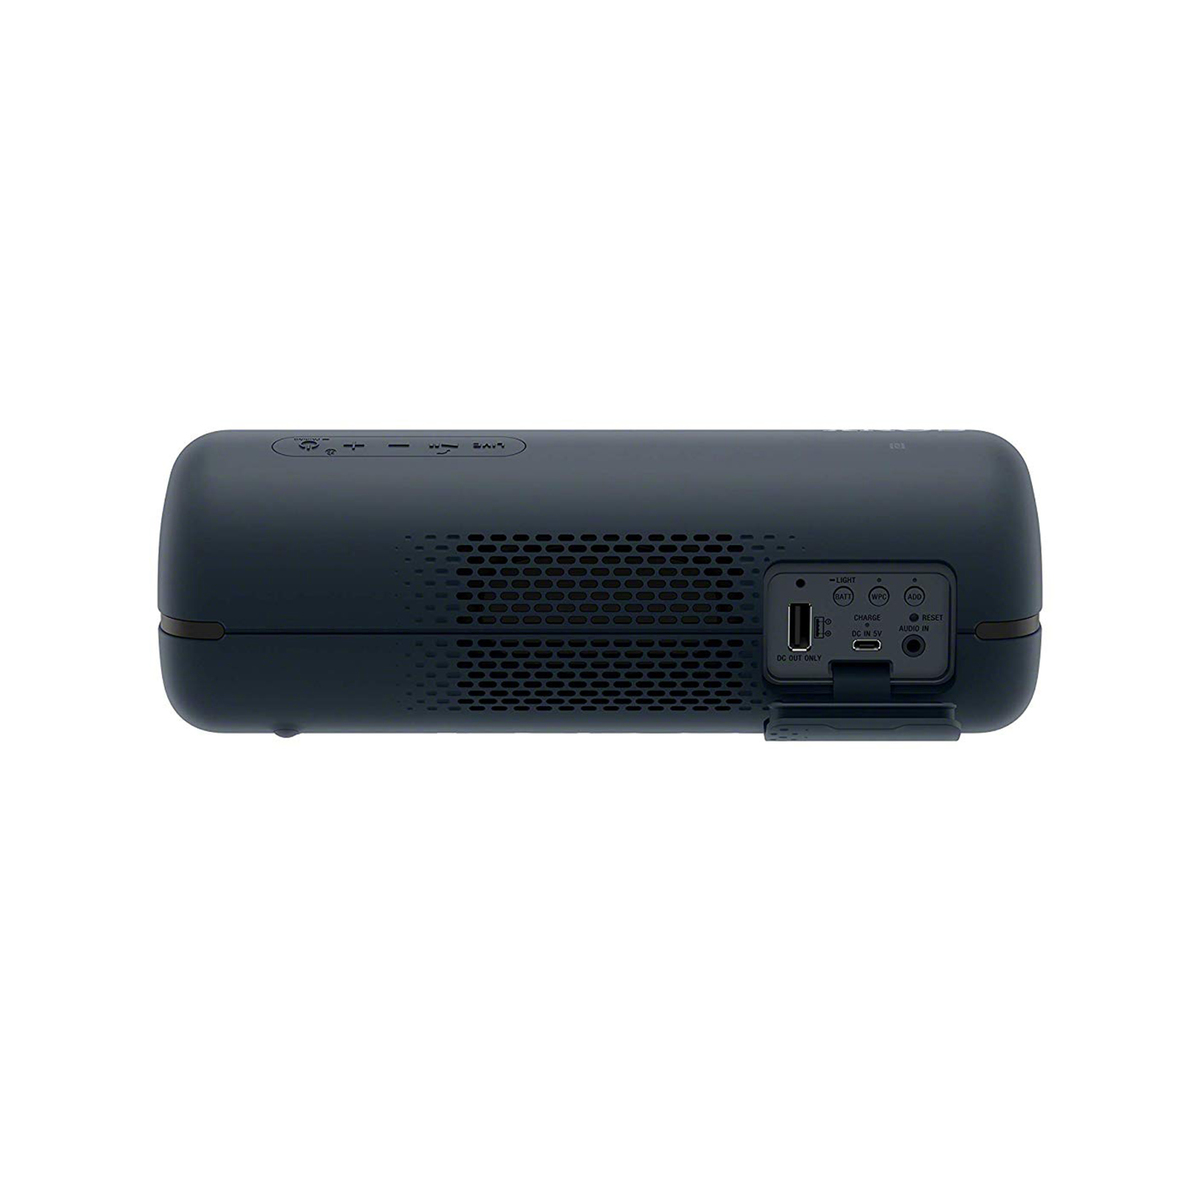 Sony Wireless Bluetooth Speaker SRS-XB32 Black